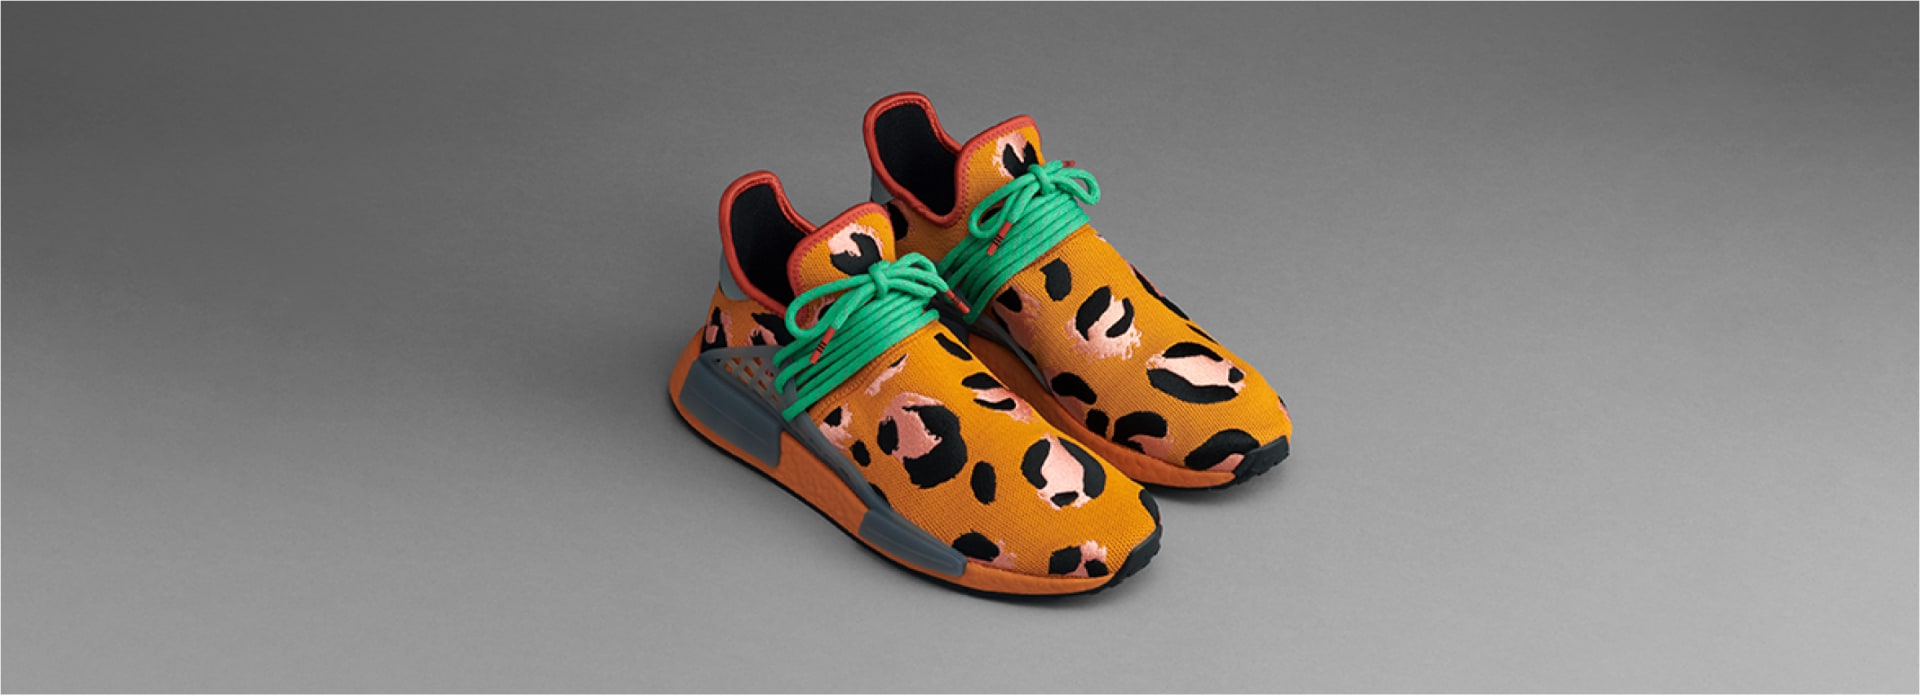 Pair of orange Hu NMD Animal Print shoes against gray background